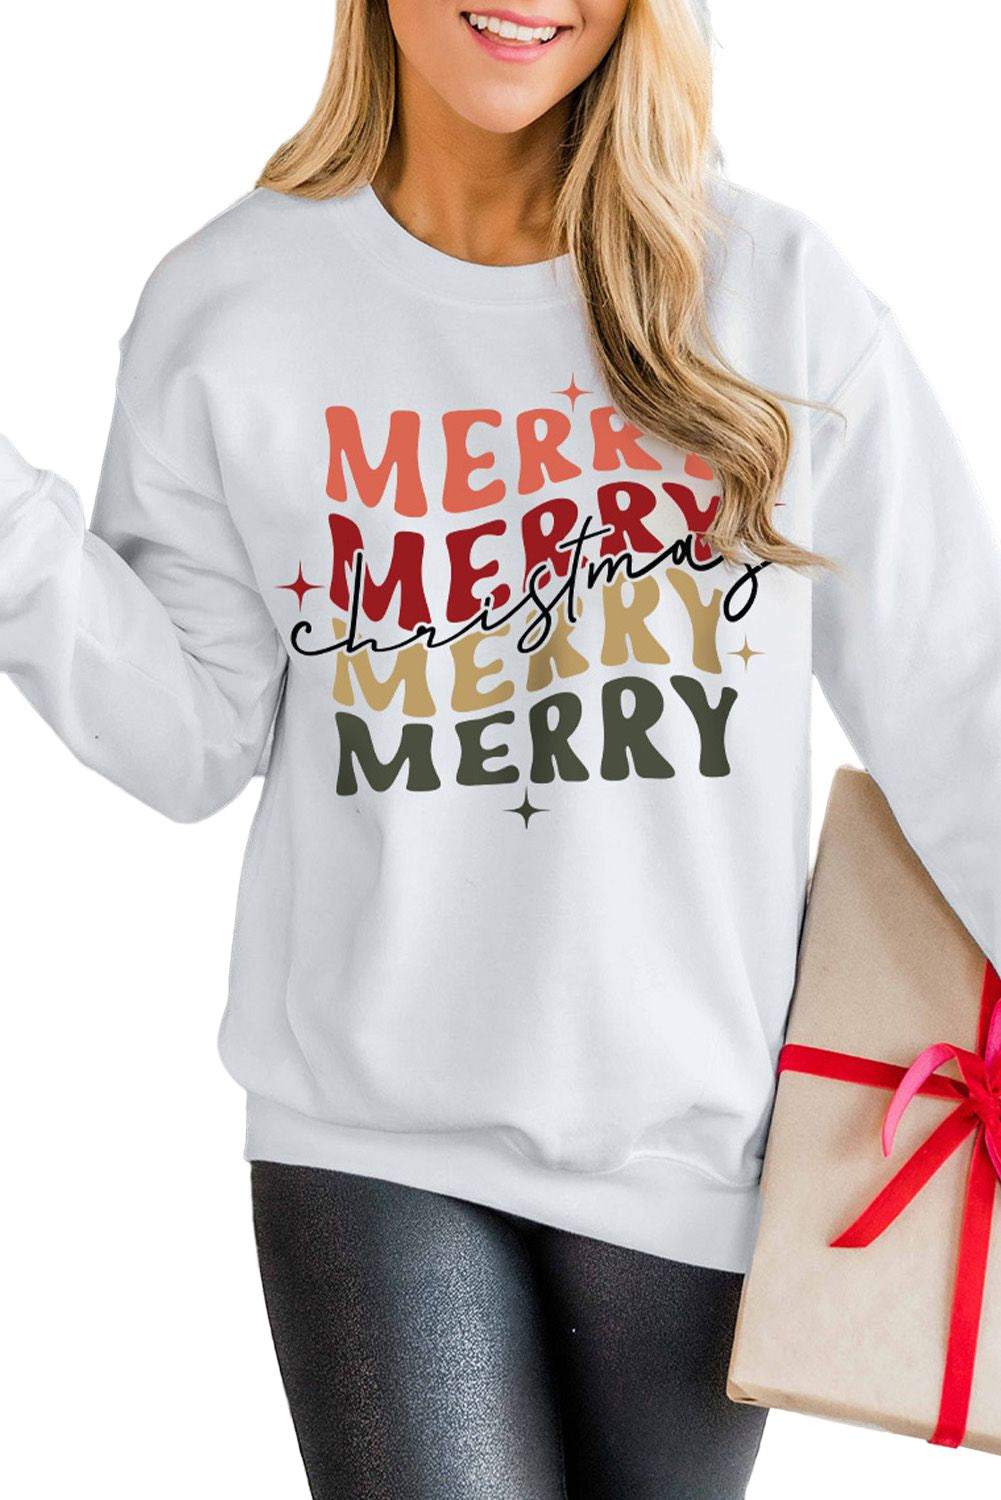 Beige MERRY Christmas Letter Graphic Print Pullover Sweatshirt Graphic Sweatshirts JT's Designer Fashion